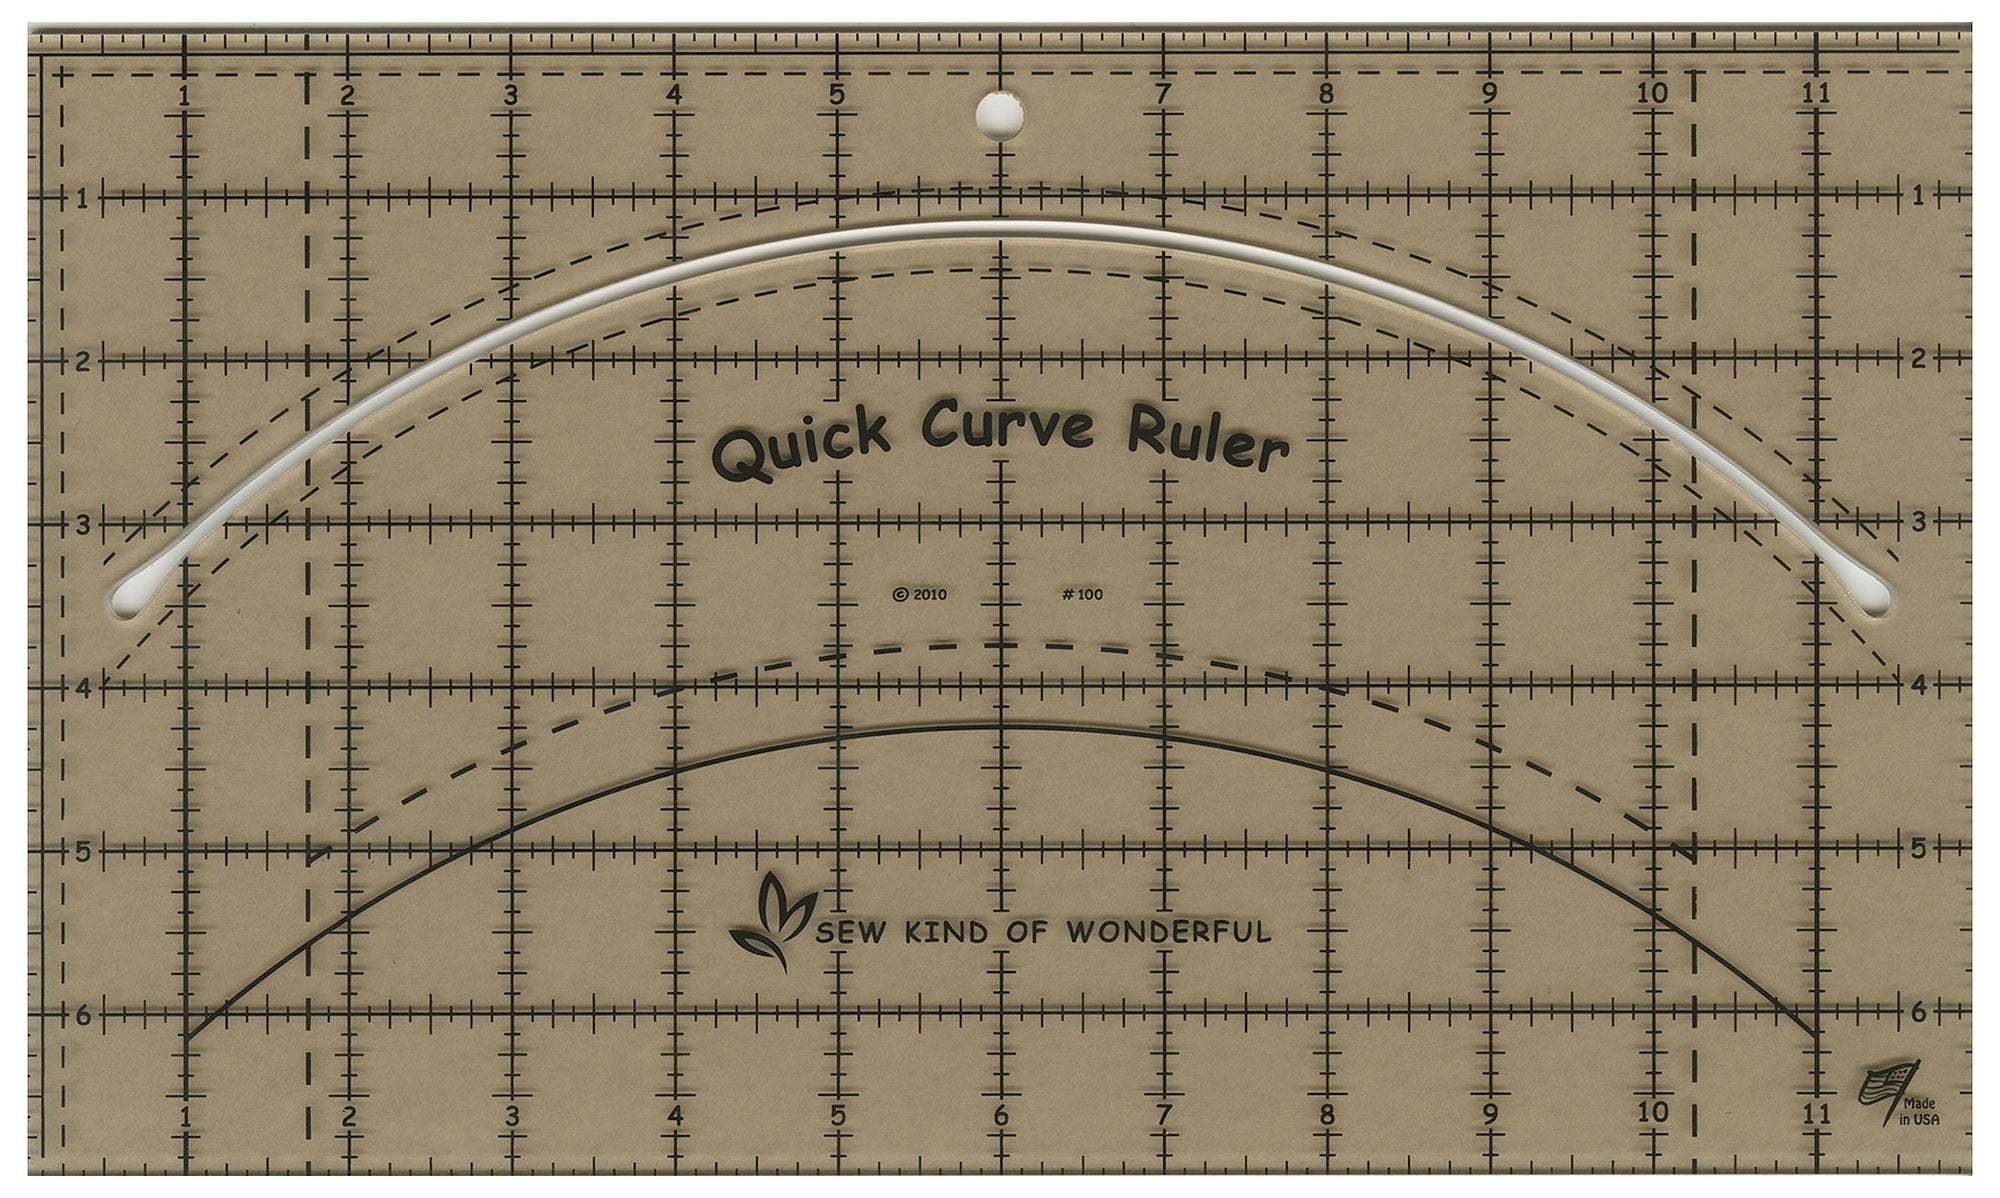 Quick Curve Ruler - Sew Kind of Wonderful